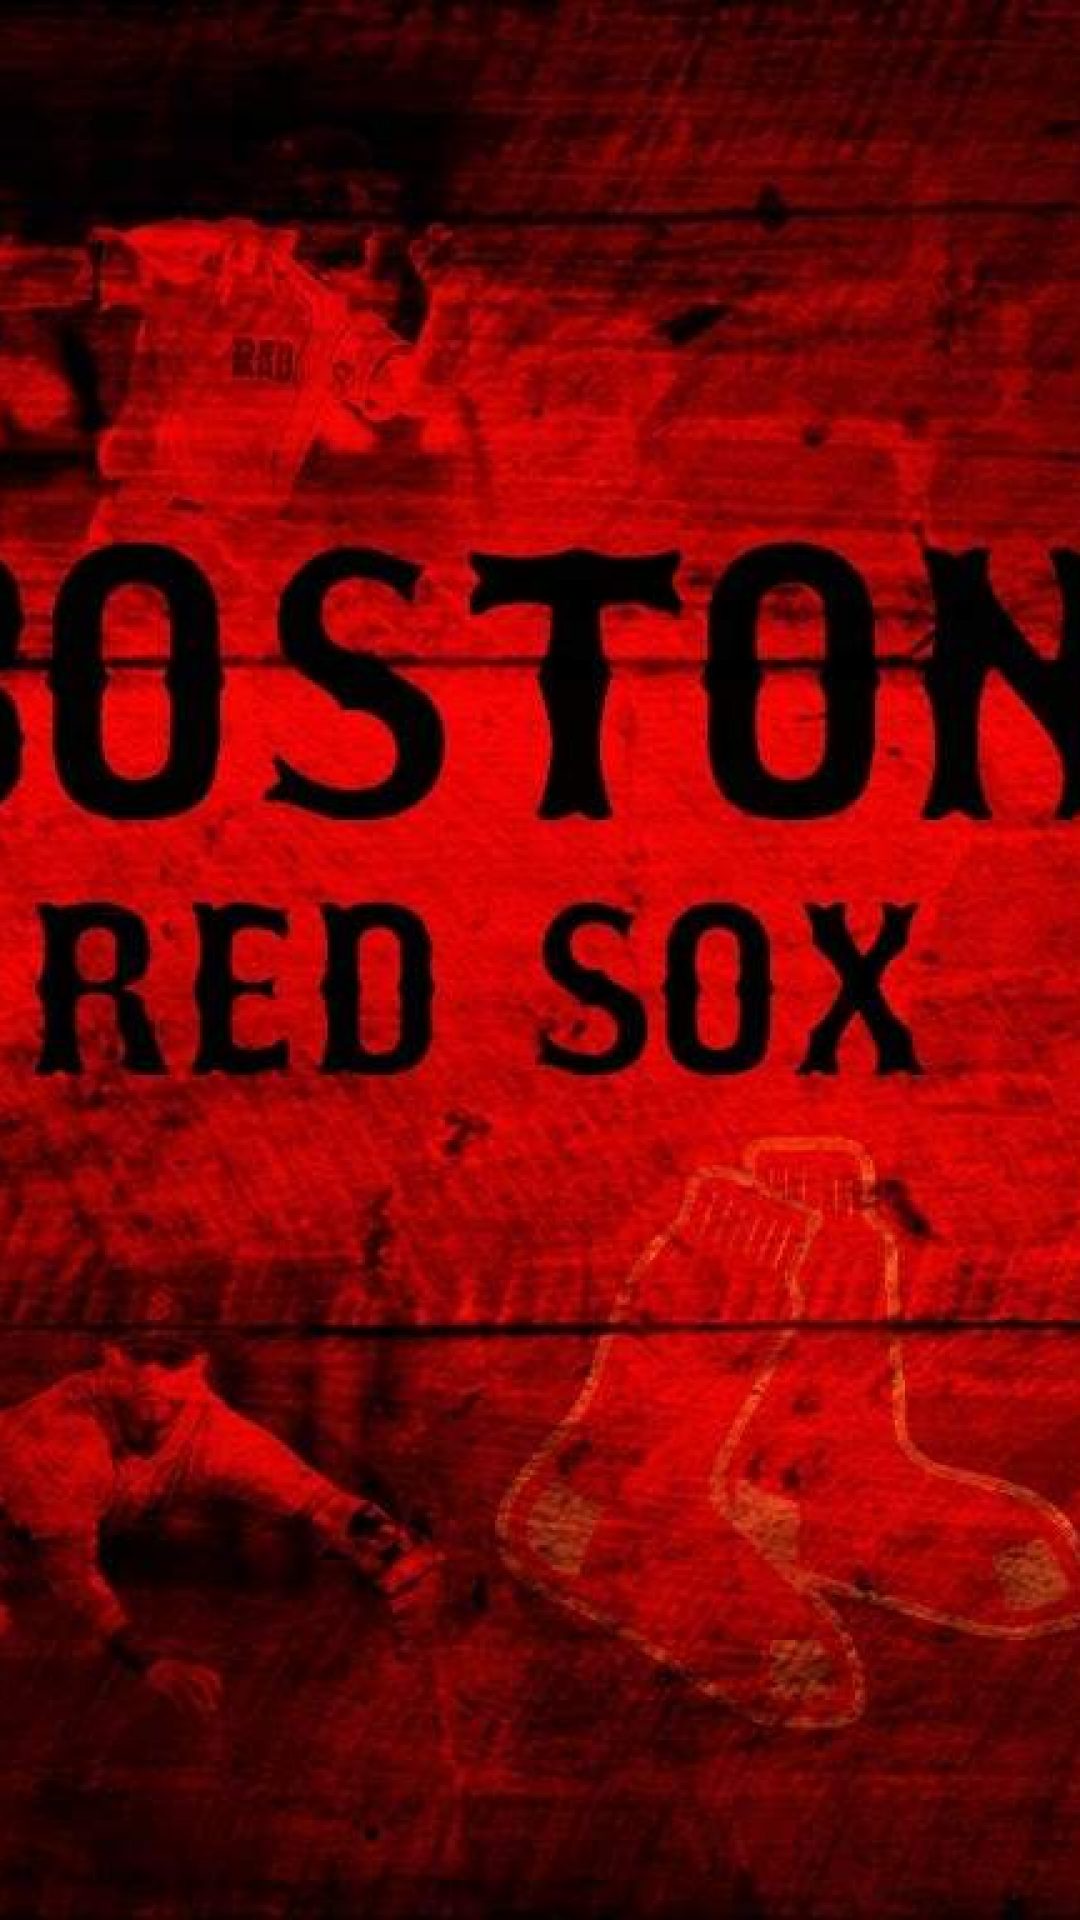 Boston Red Sox Image Wallpaper